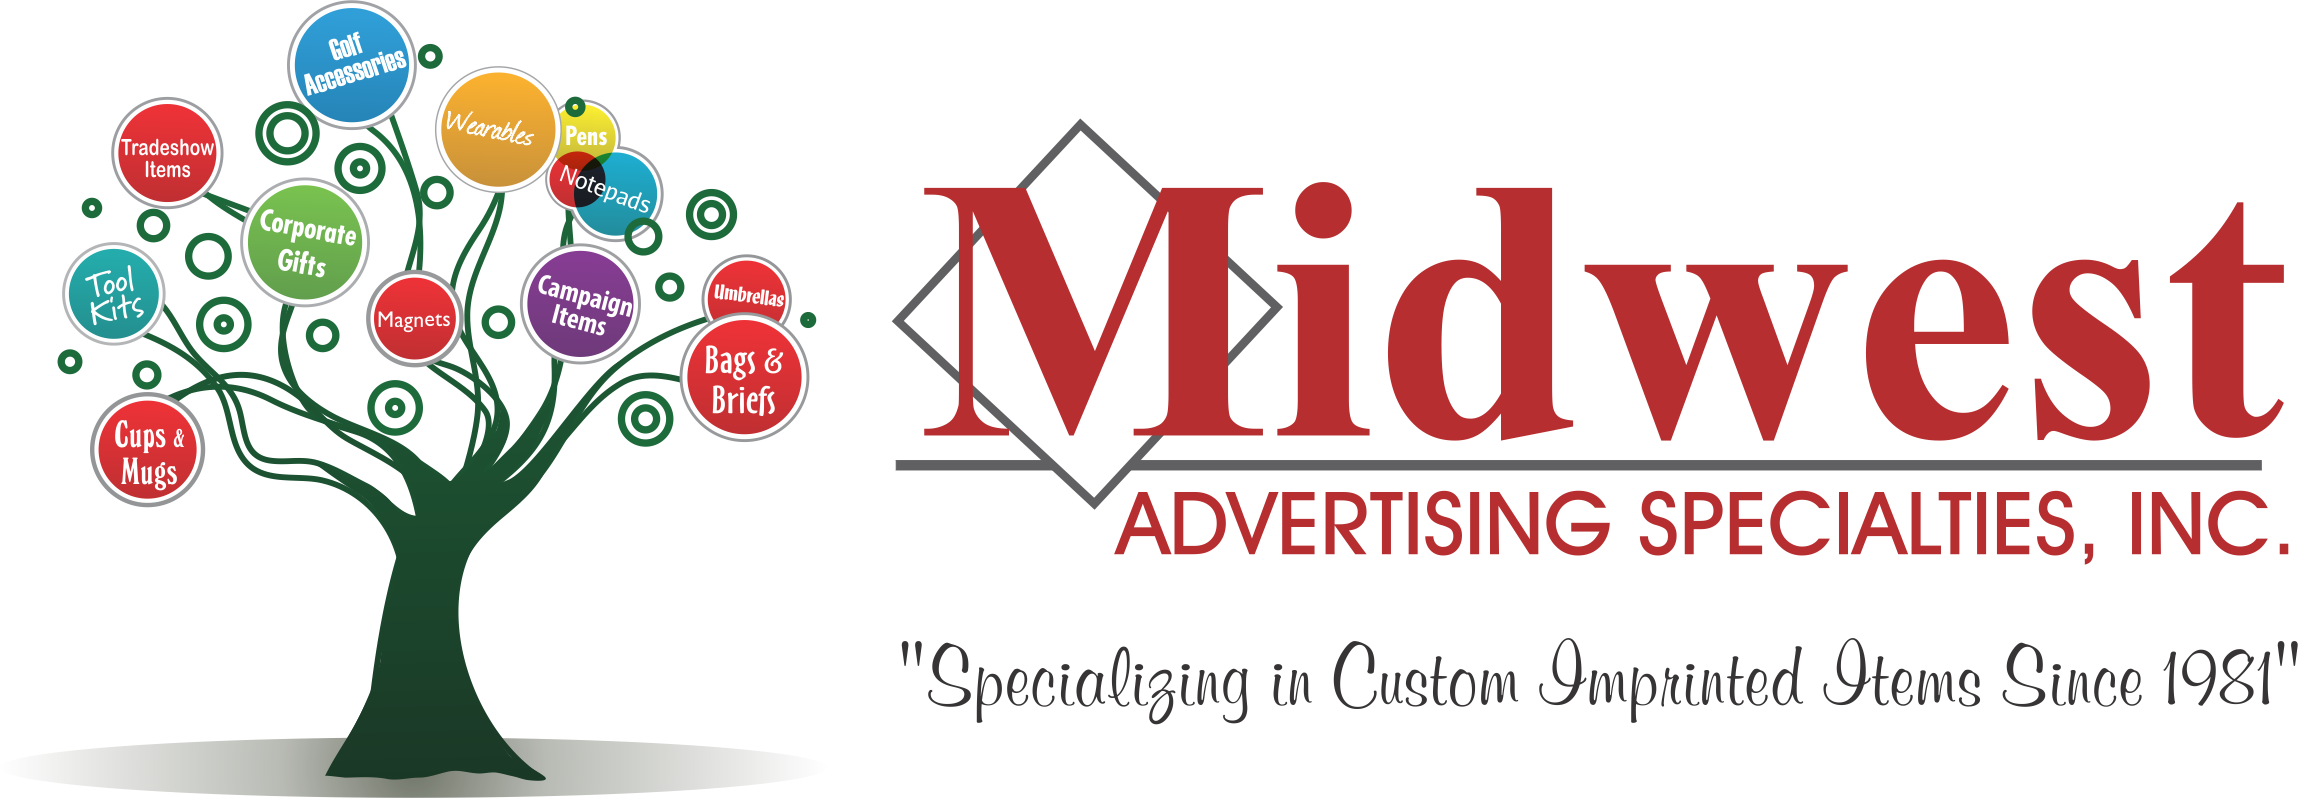 Midwest Advertising Specs Inc's Logo